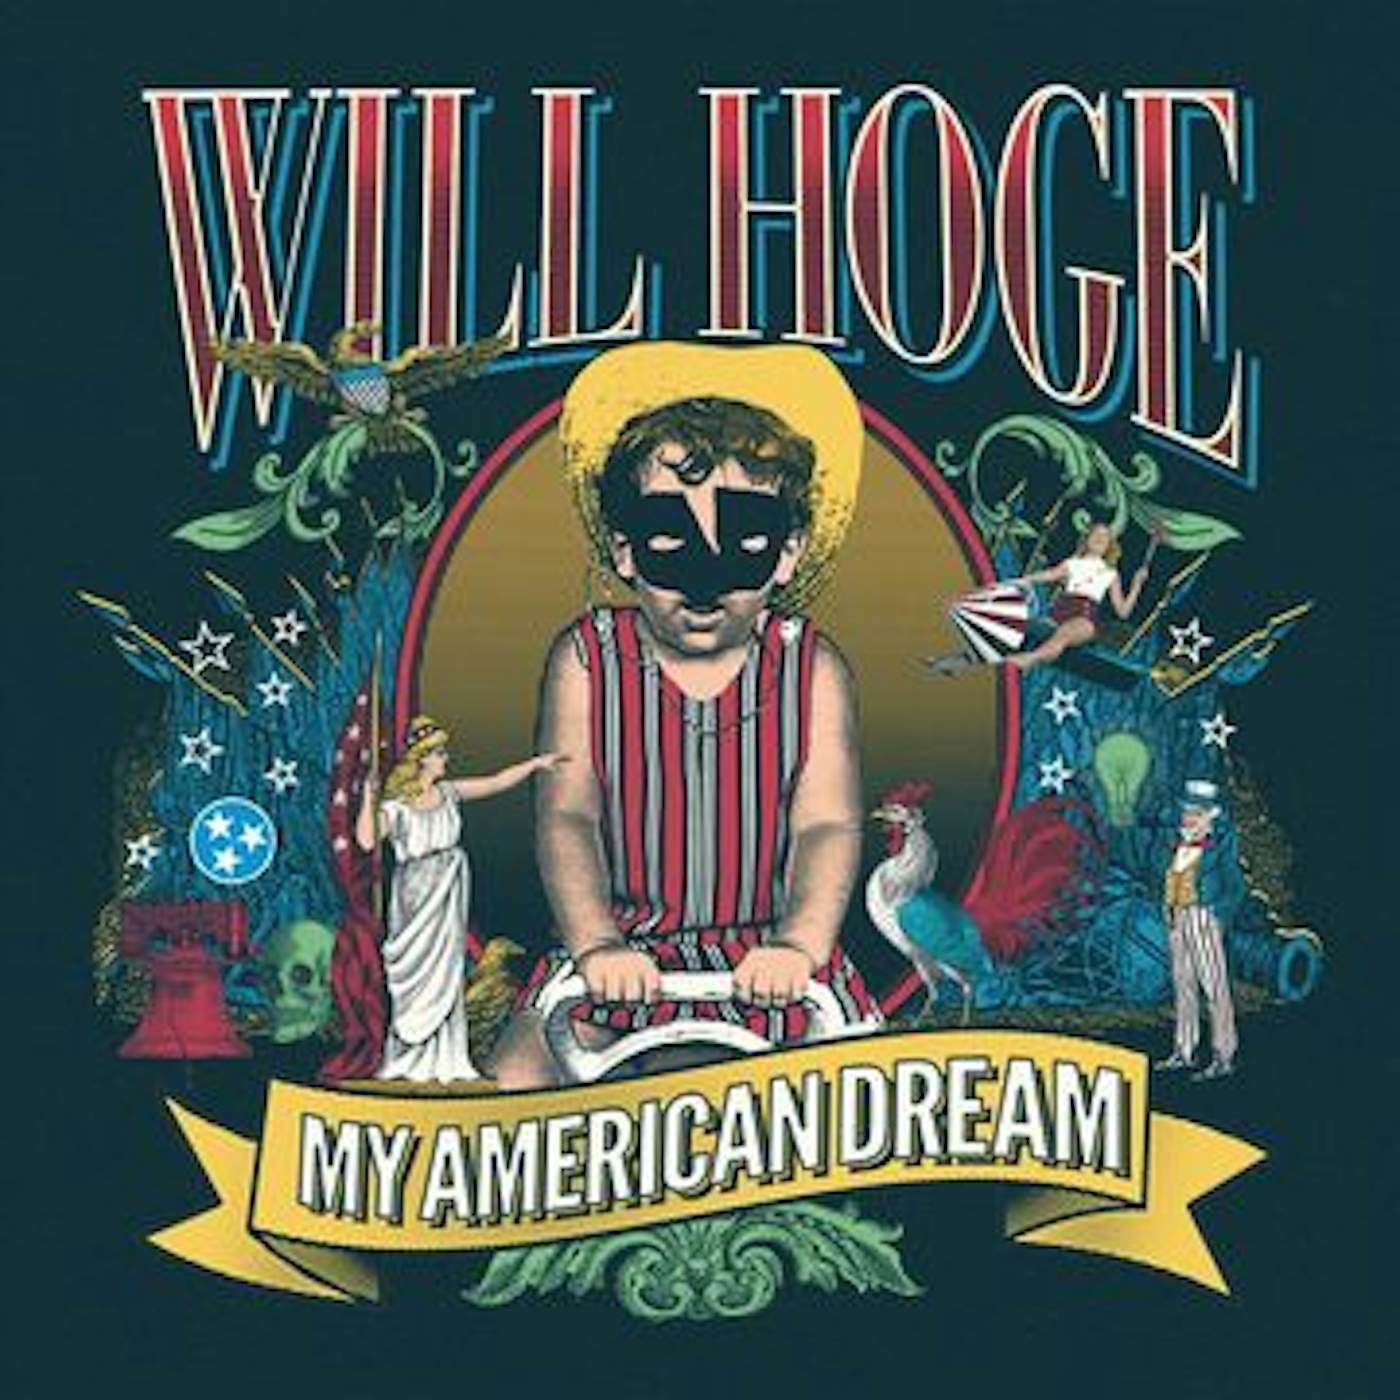 Will Hoge My American Dream Vinyl Record